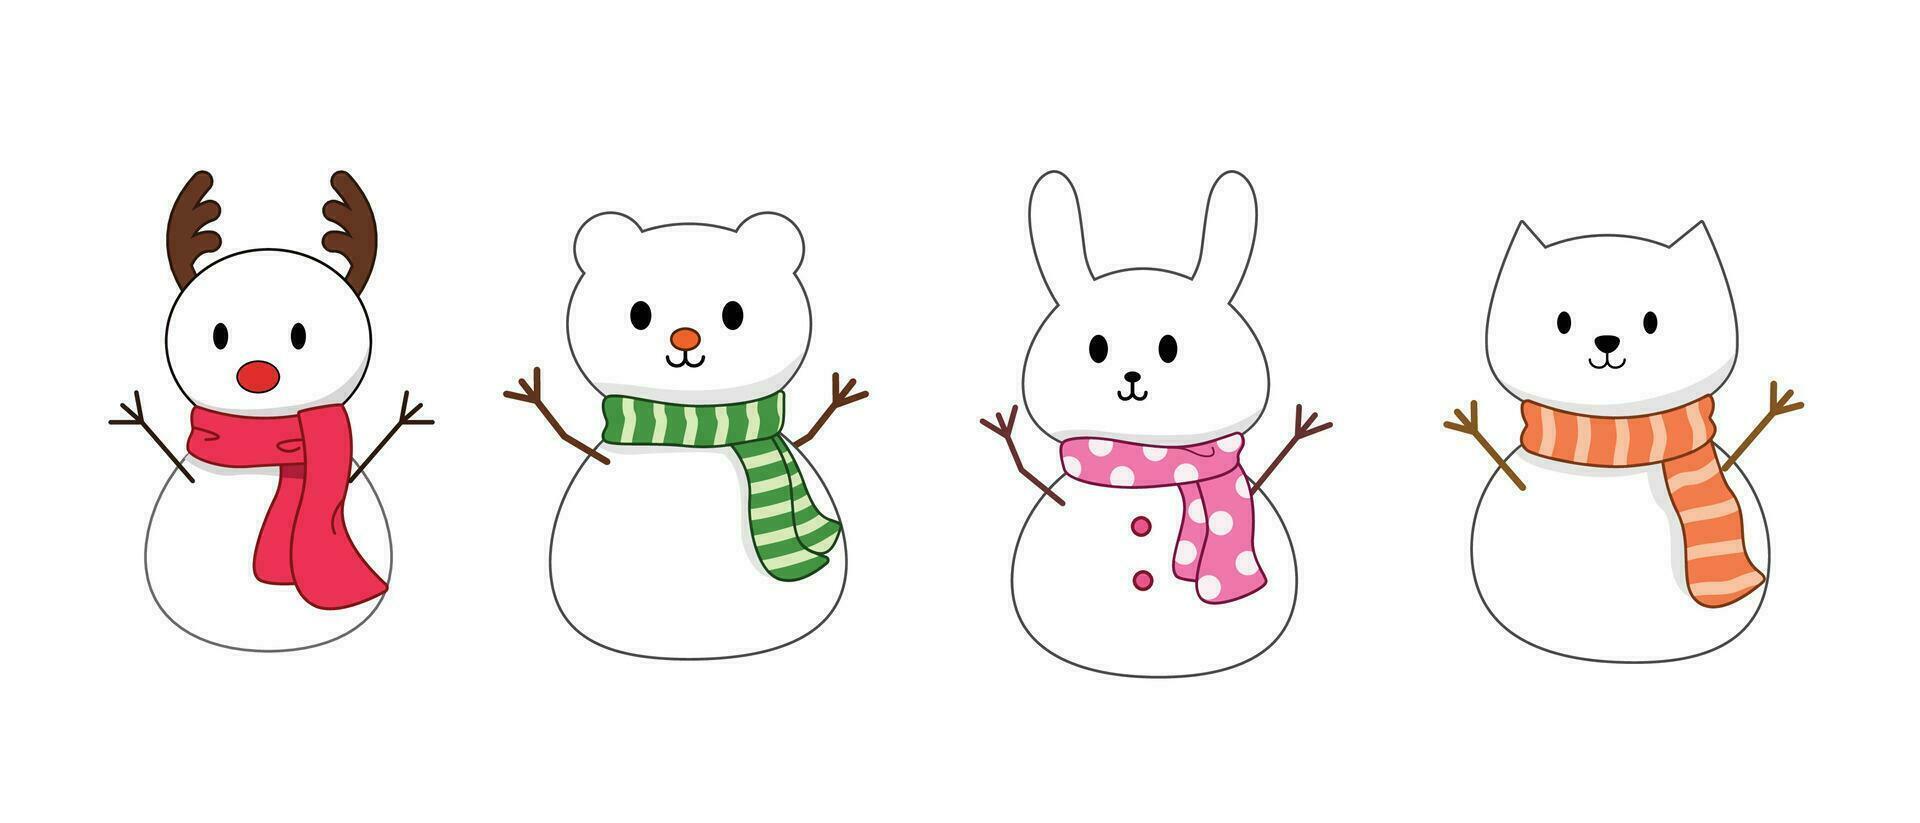 Animals snowman cartoon. Reindeer, rabbit, cat, bear for illustration and decoration vector